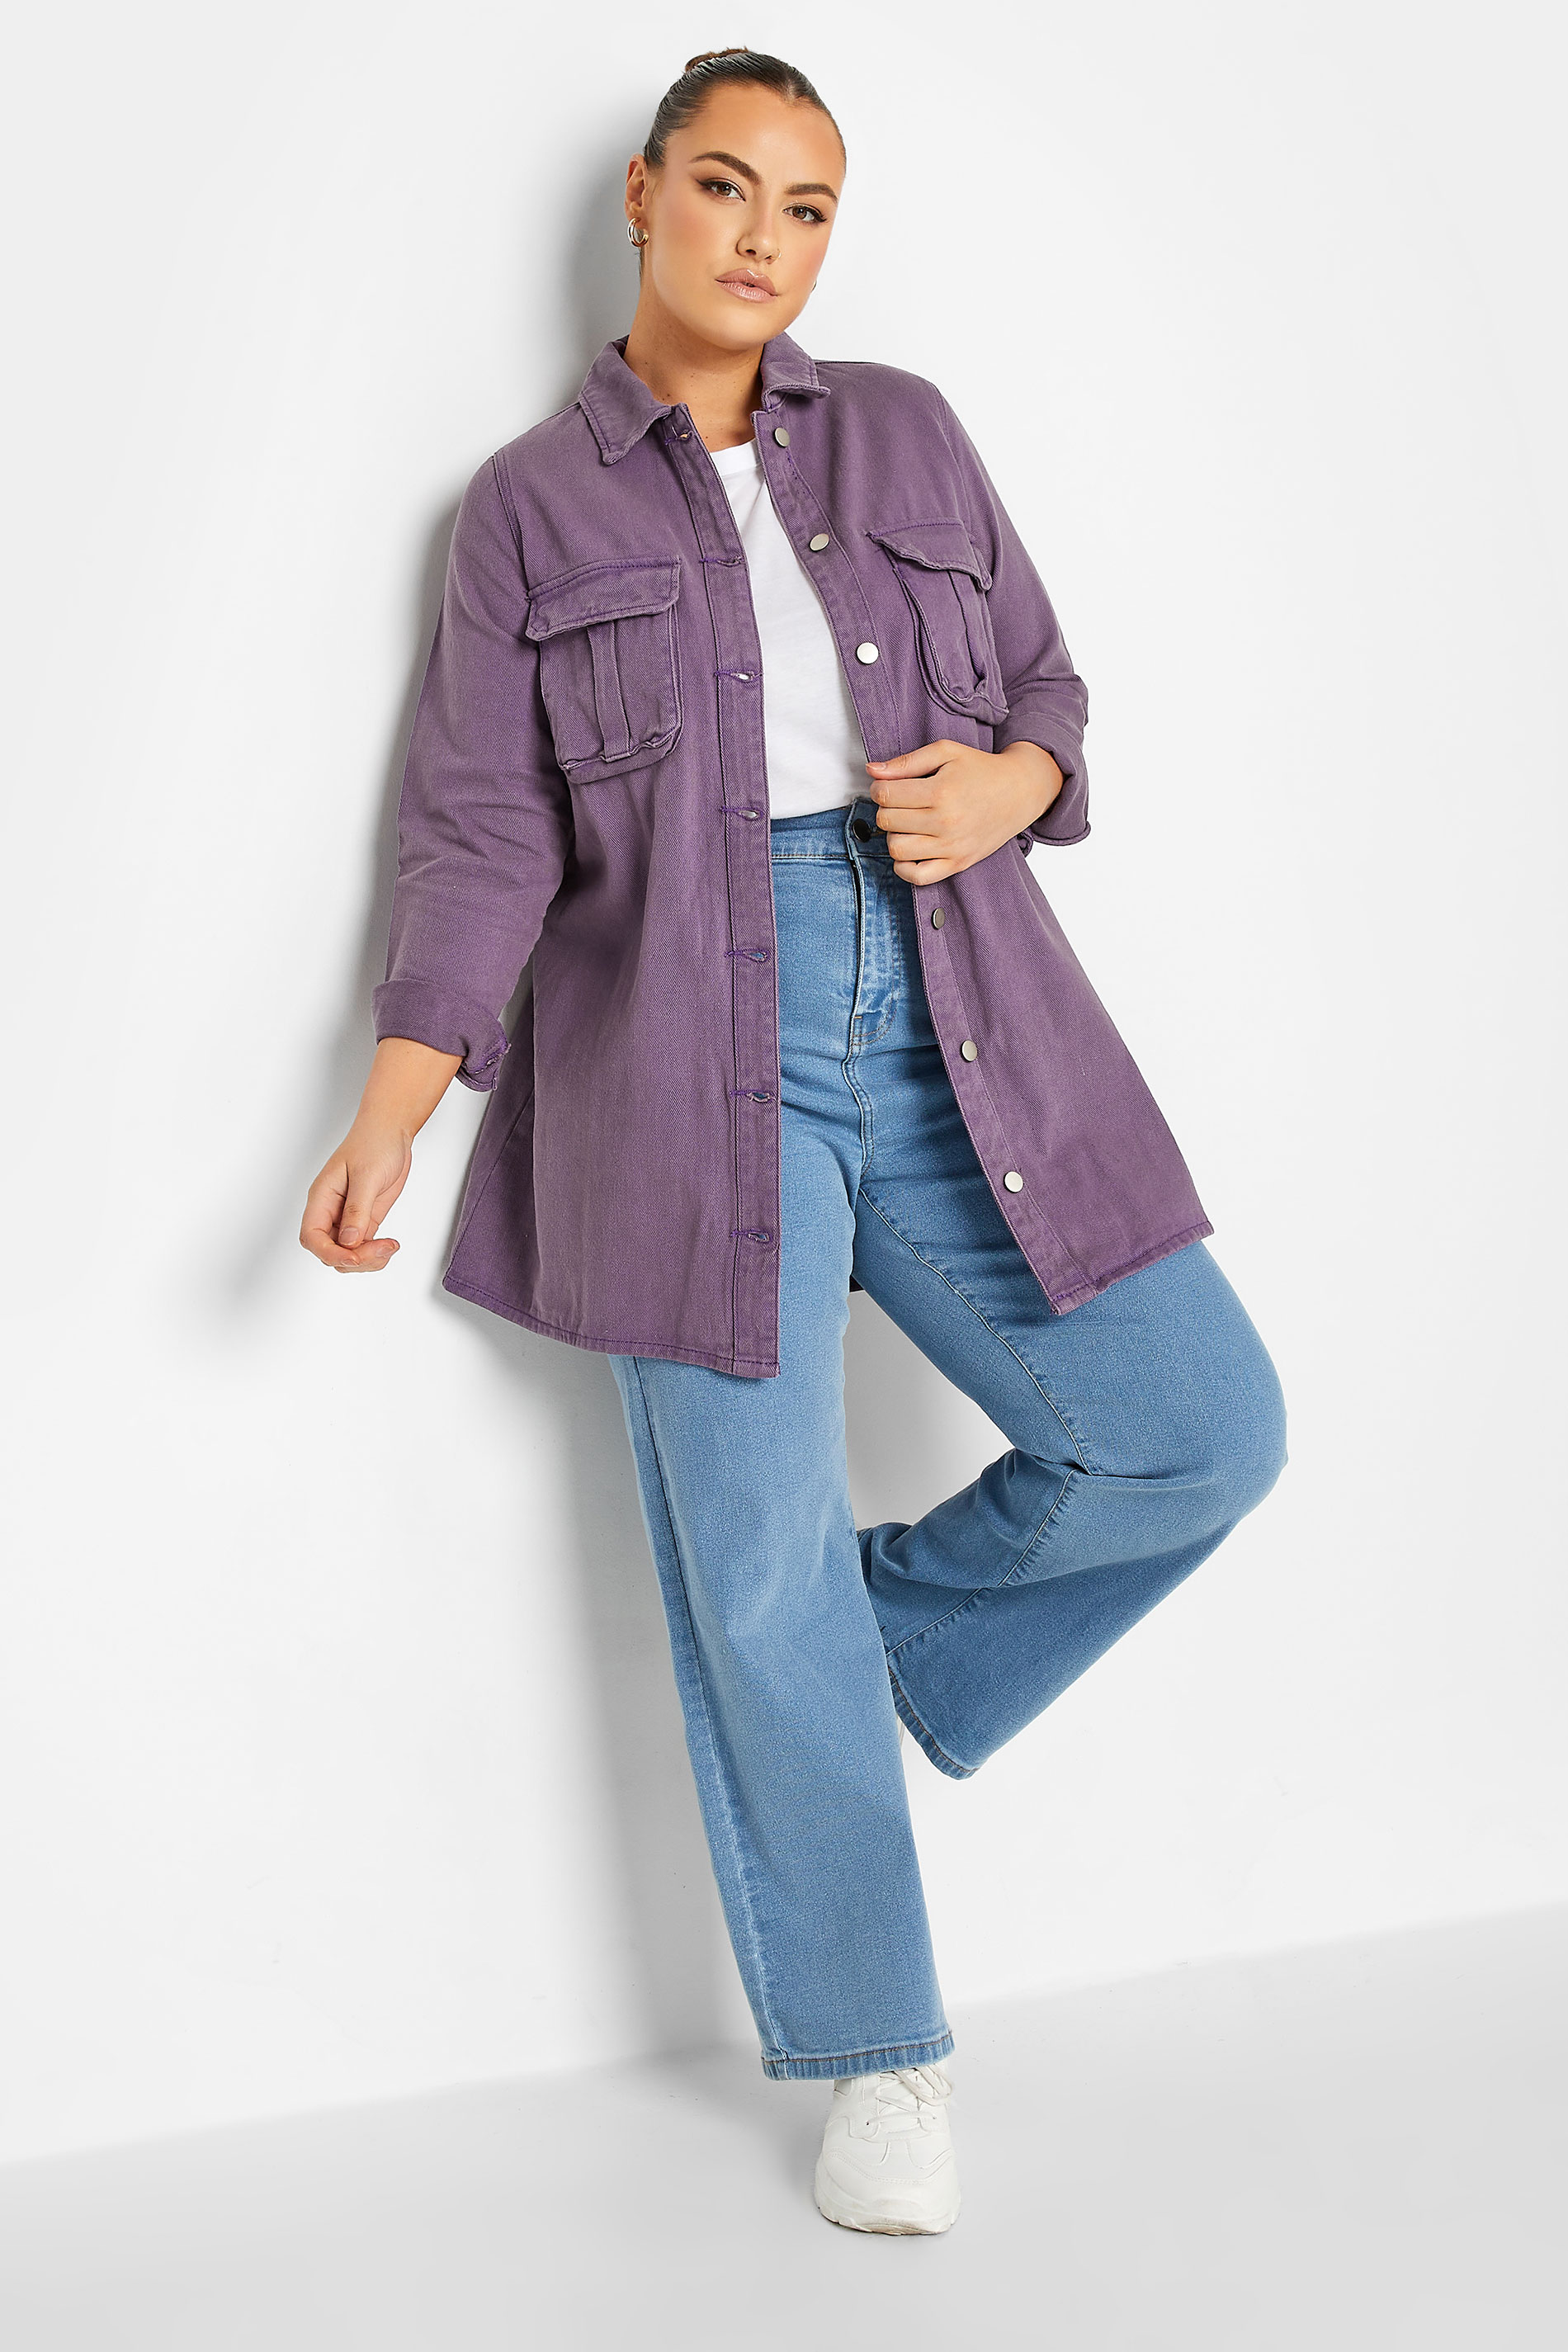 LIMITED COLLECTION Plus Size Purple Longline Denim Jacket | Yours Clothing 2